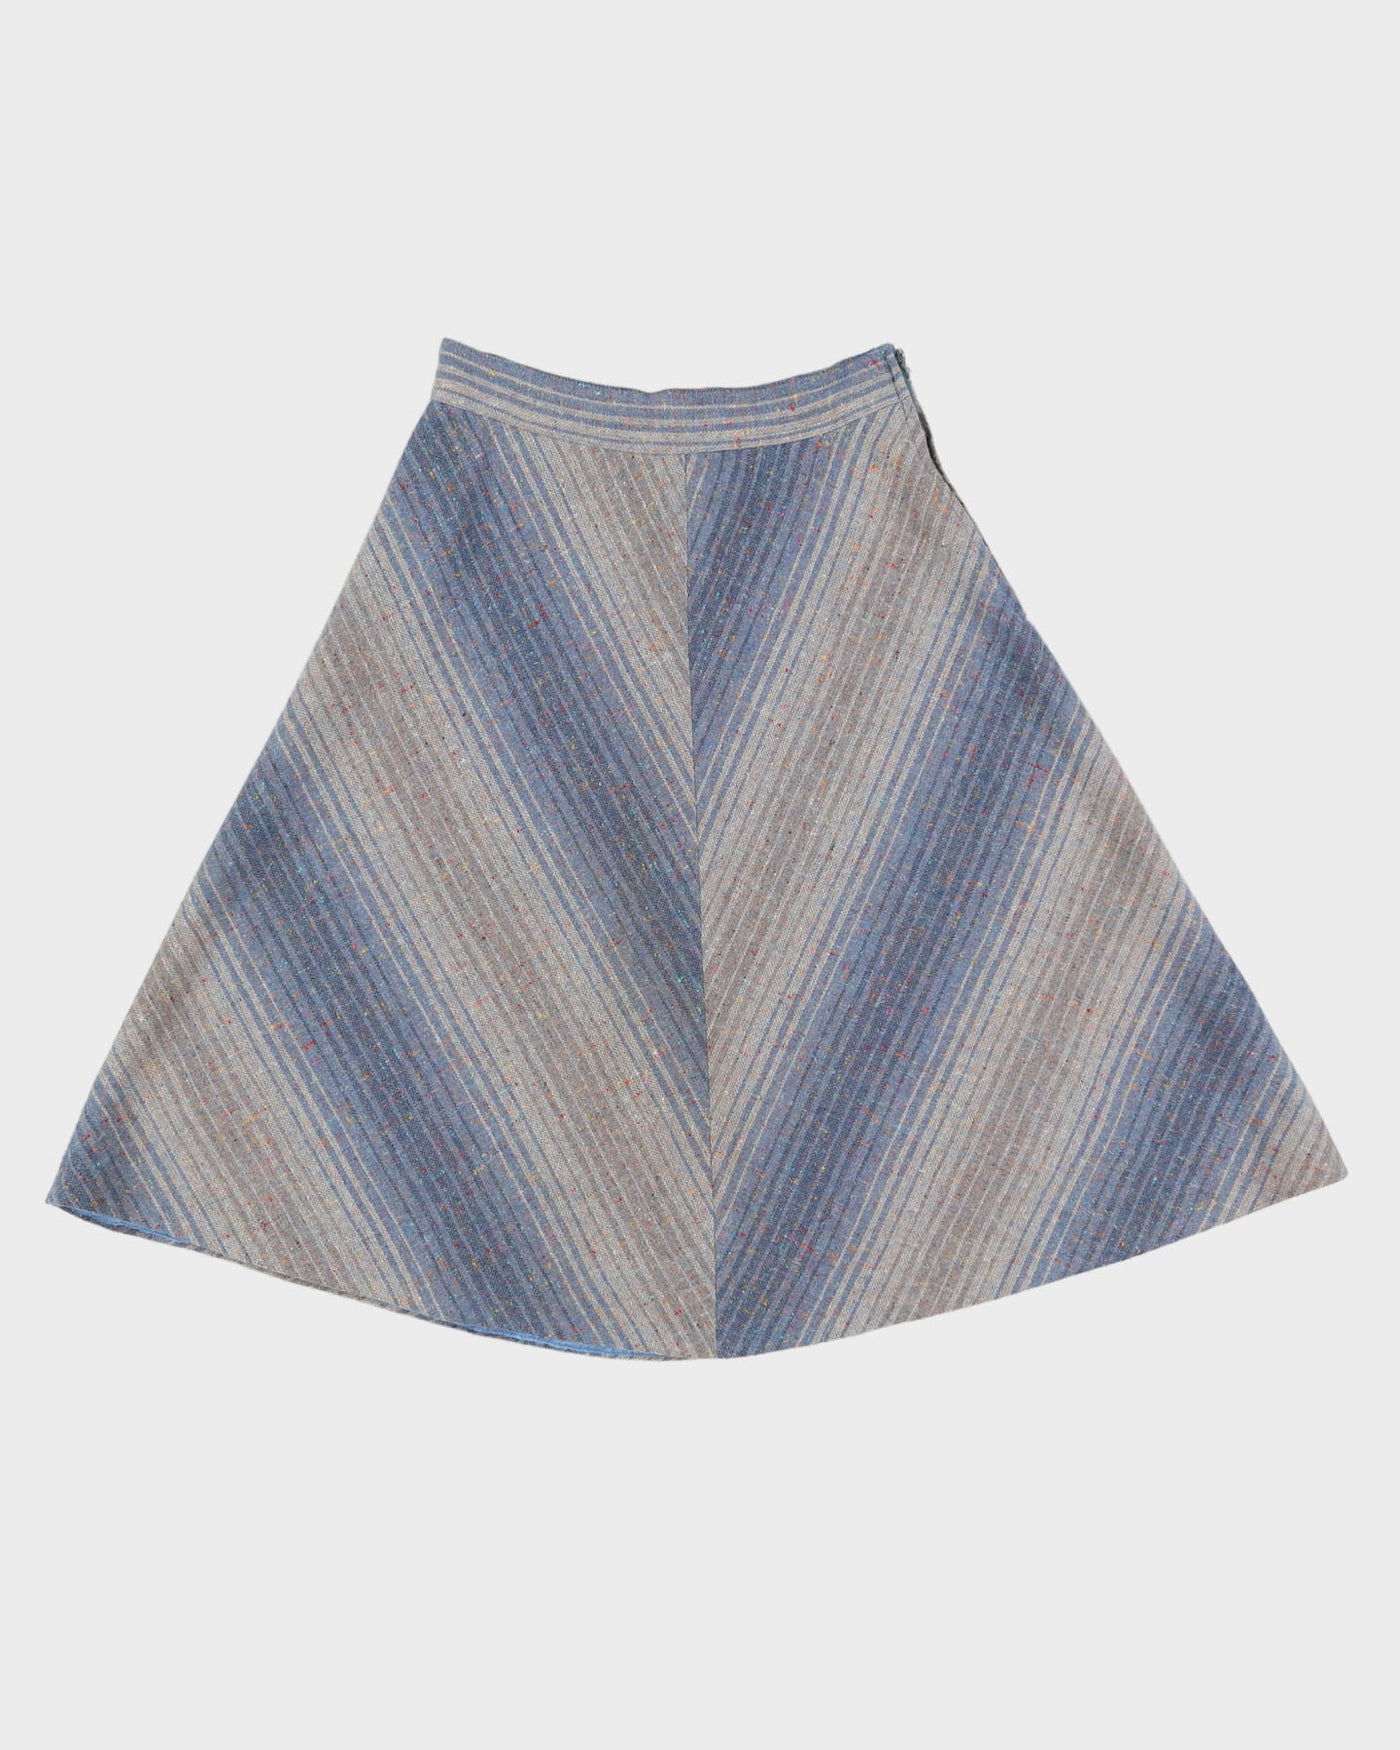 Vintage 1980s Grey Plaid A-Line Skirt - XS